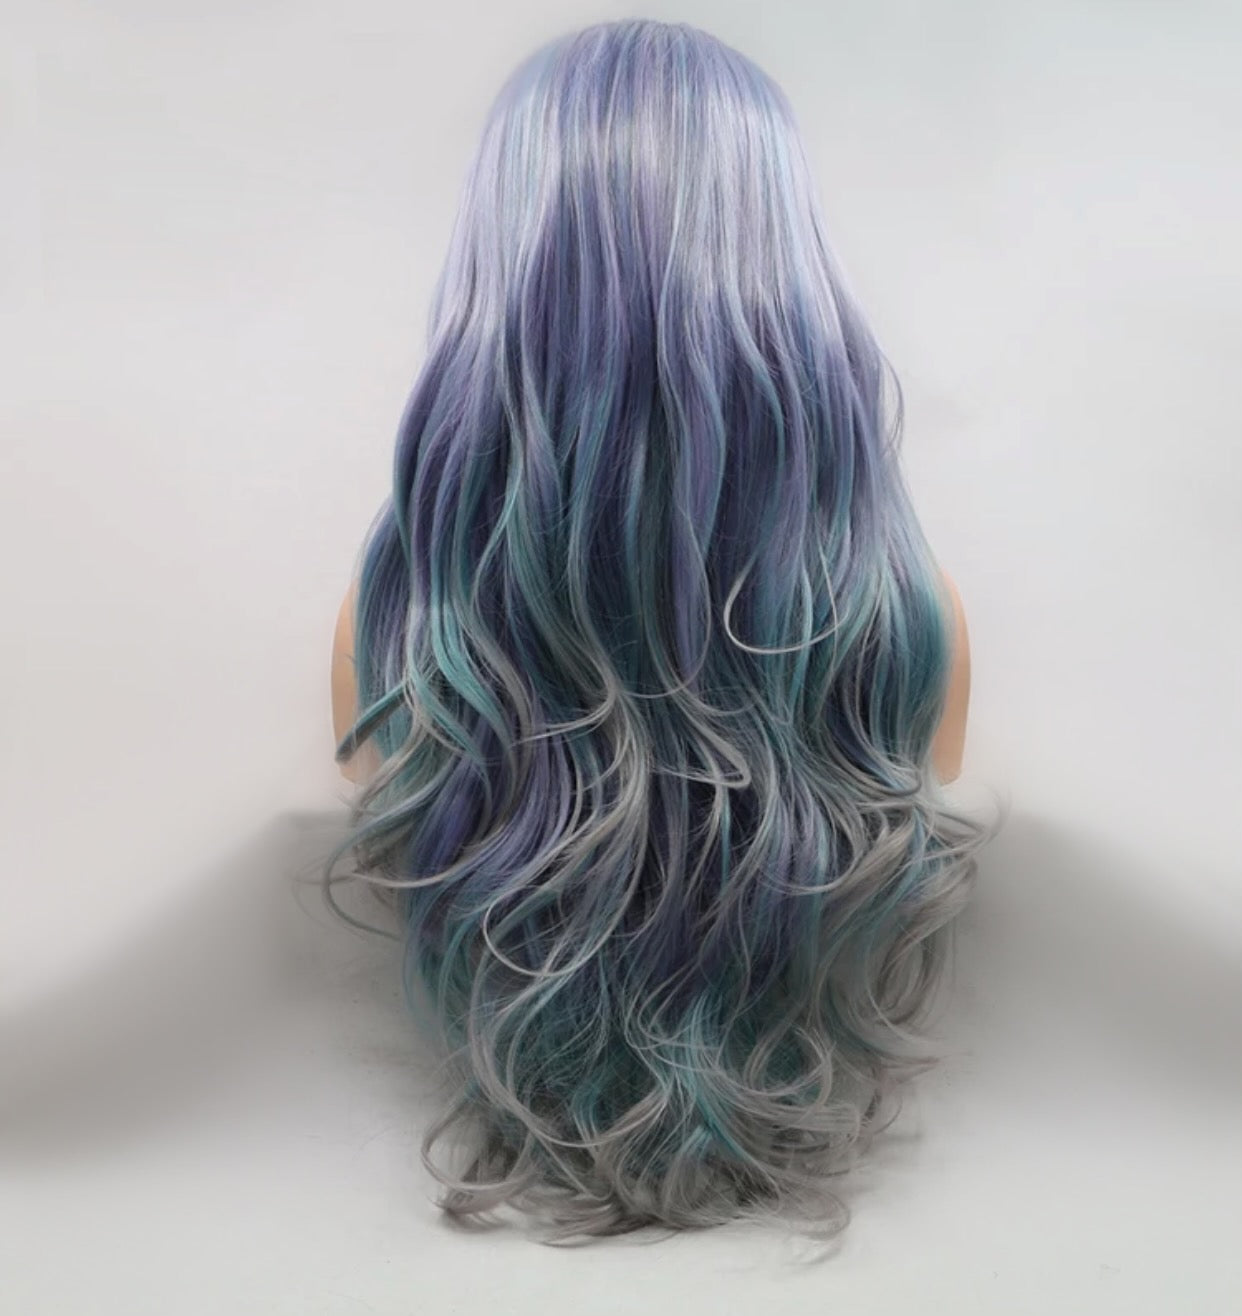 silver purple ombre hair